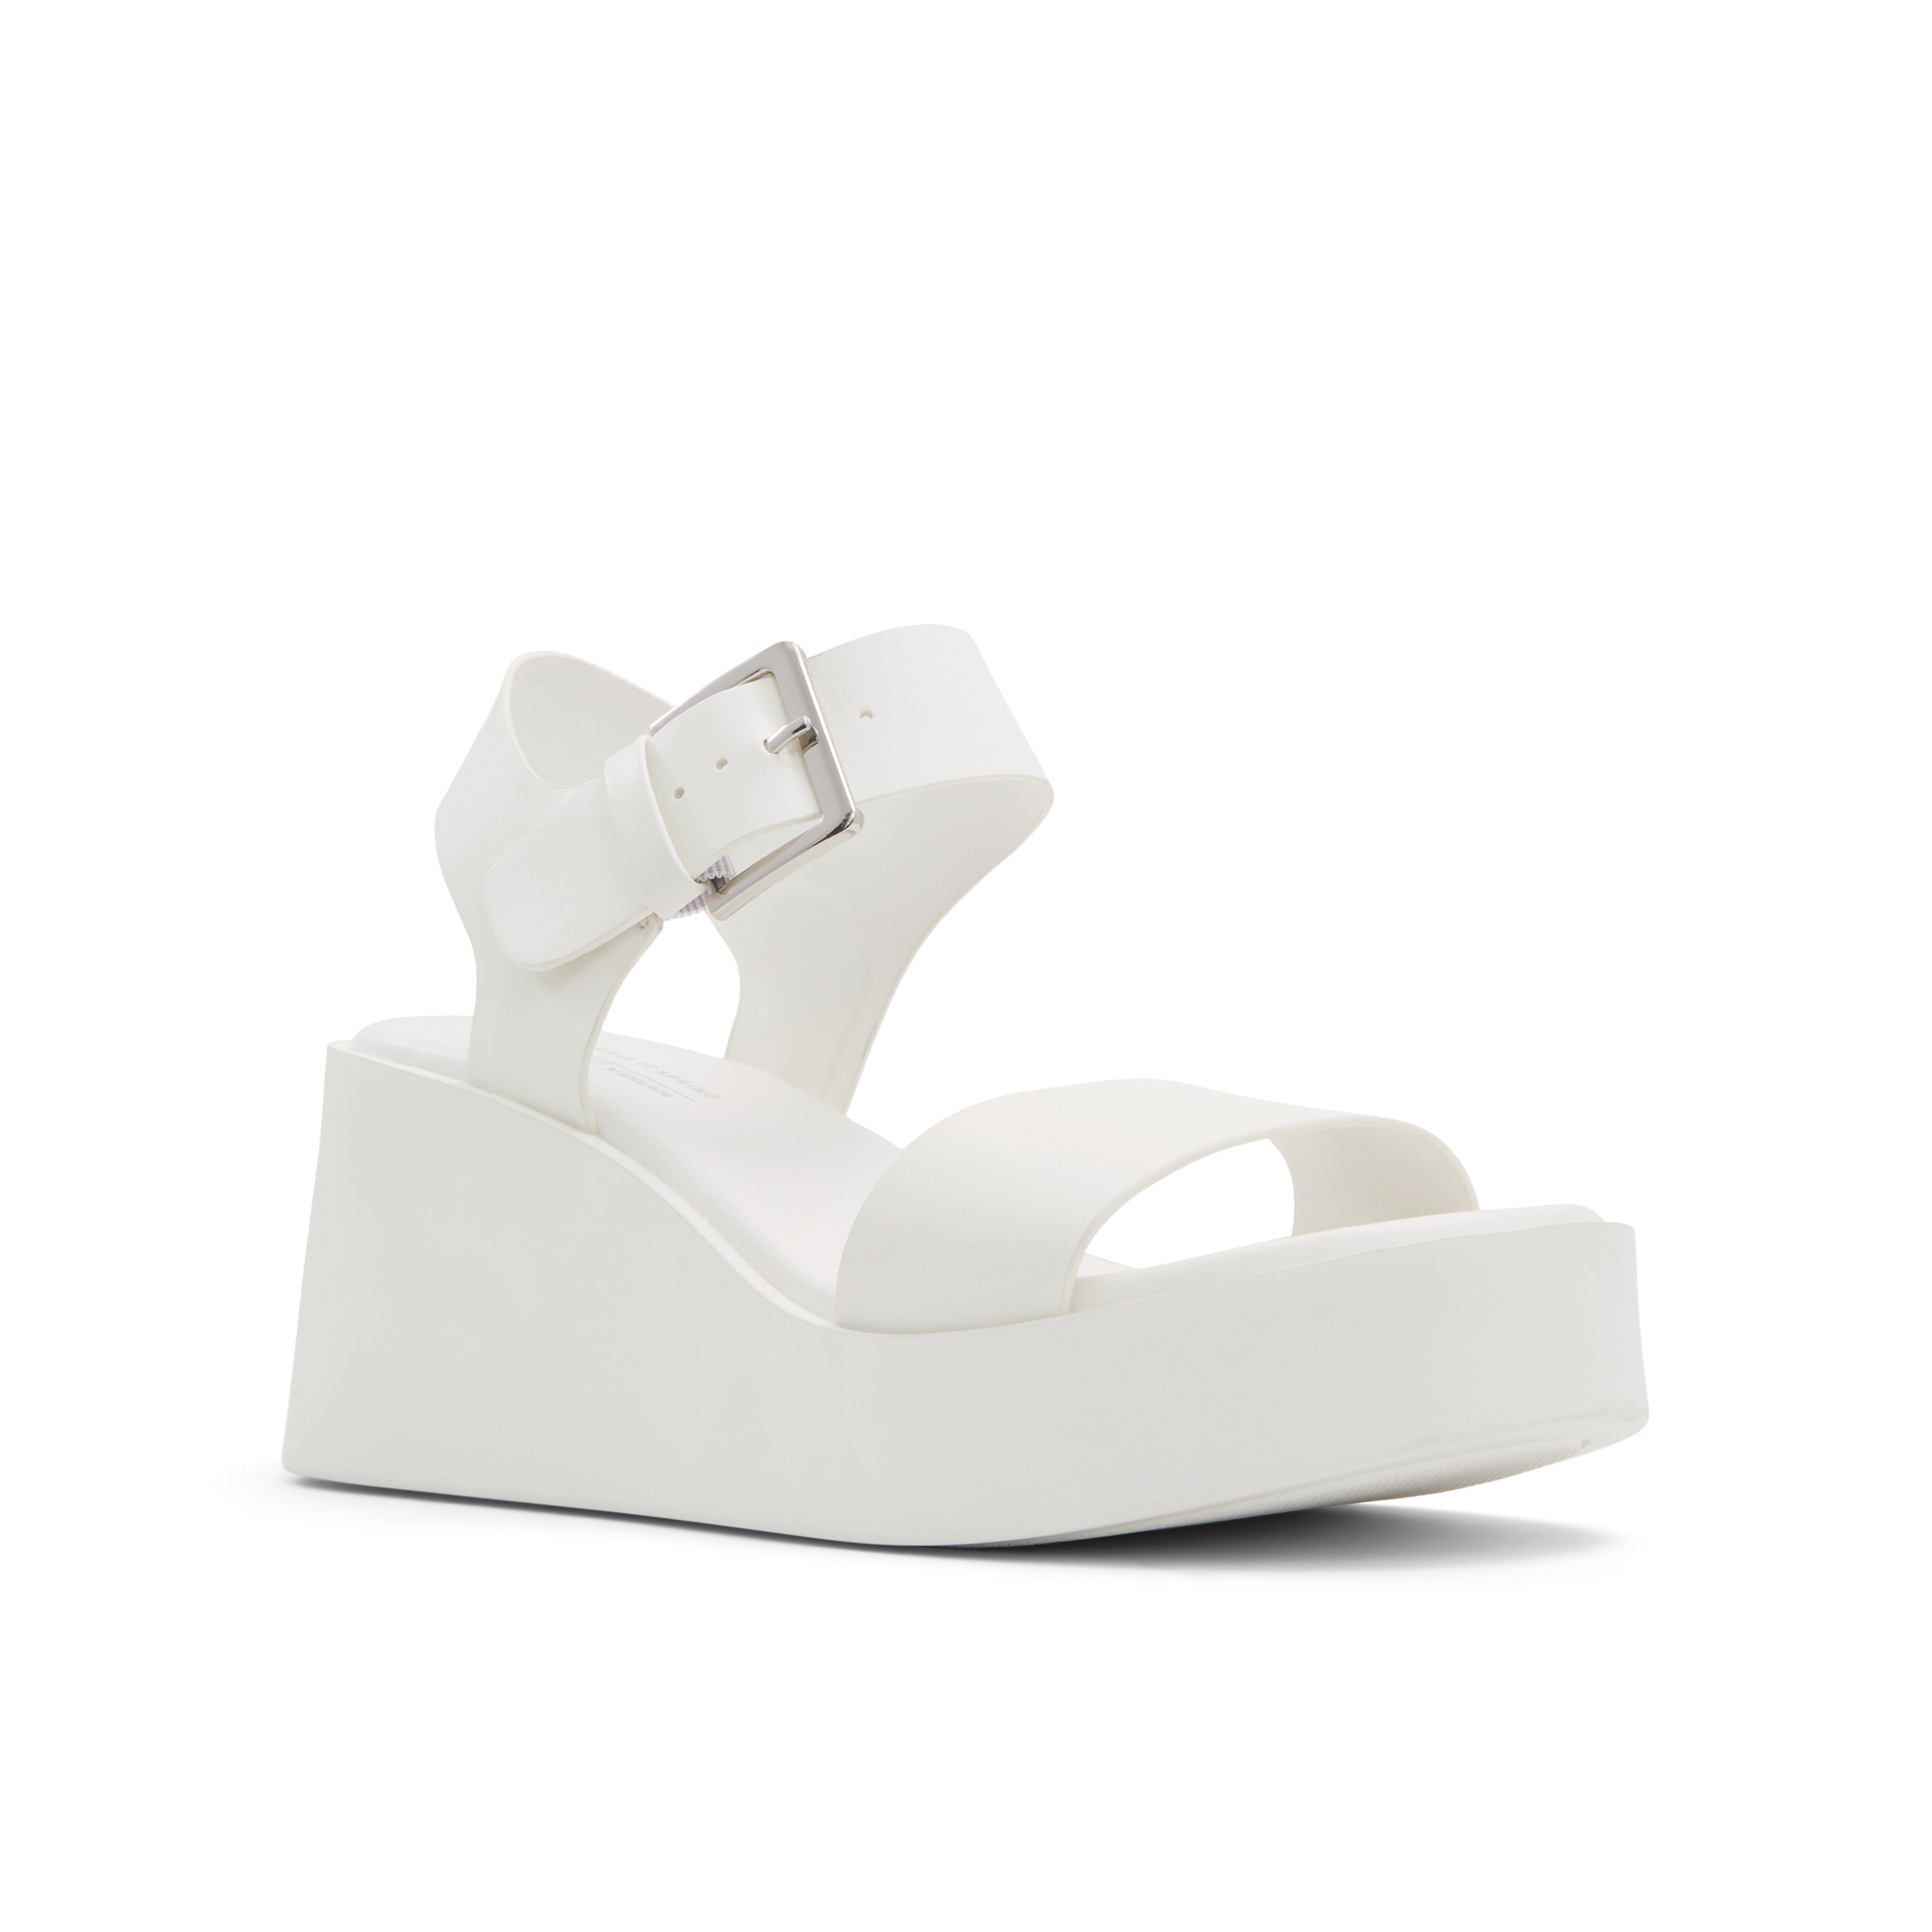 Merisa High heel platform sandals - Wedge